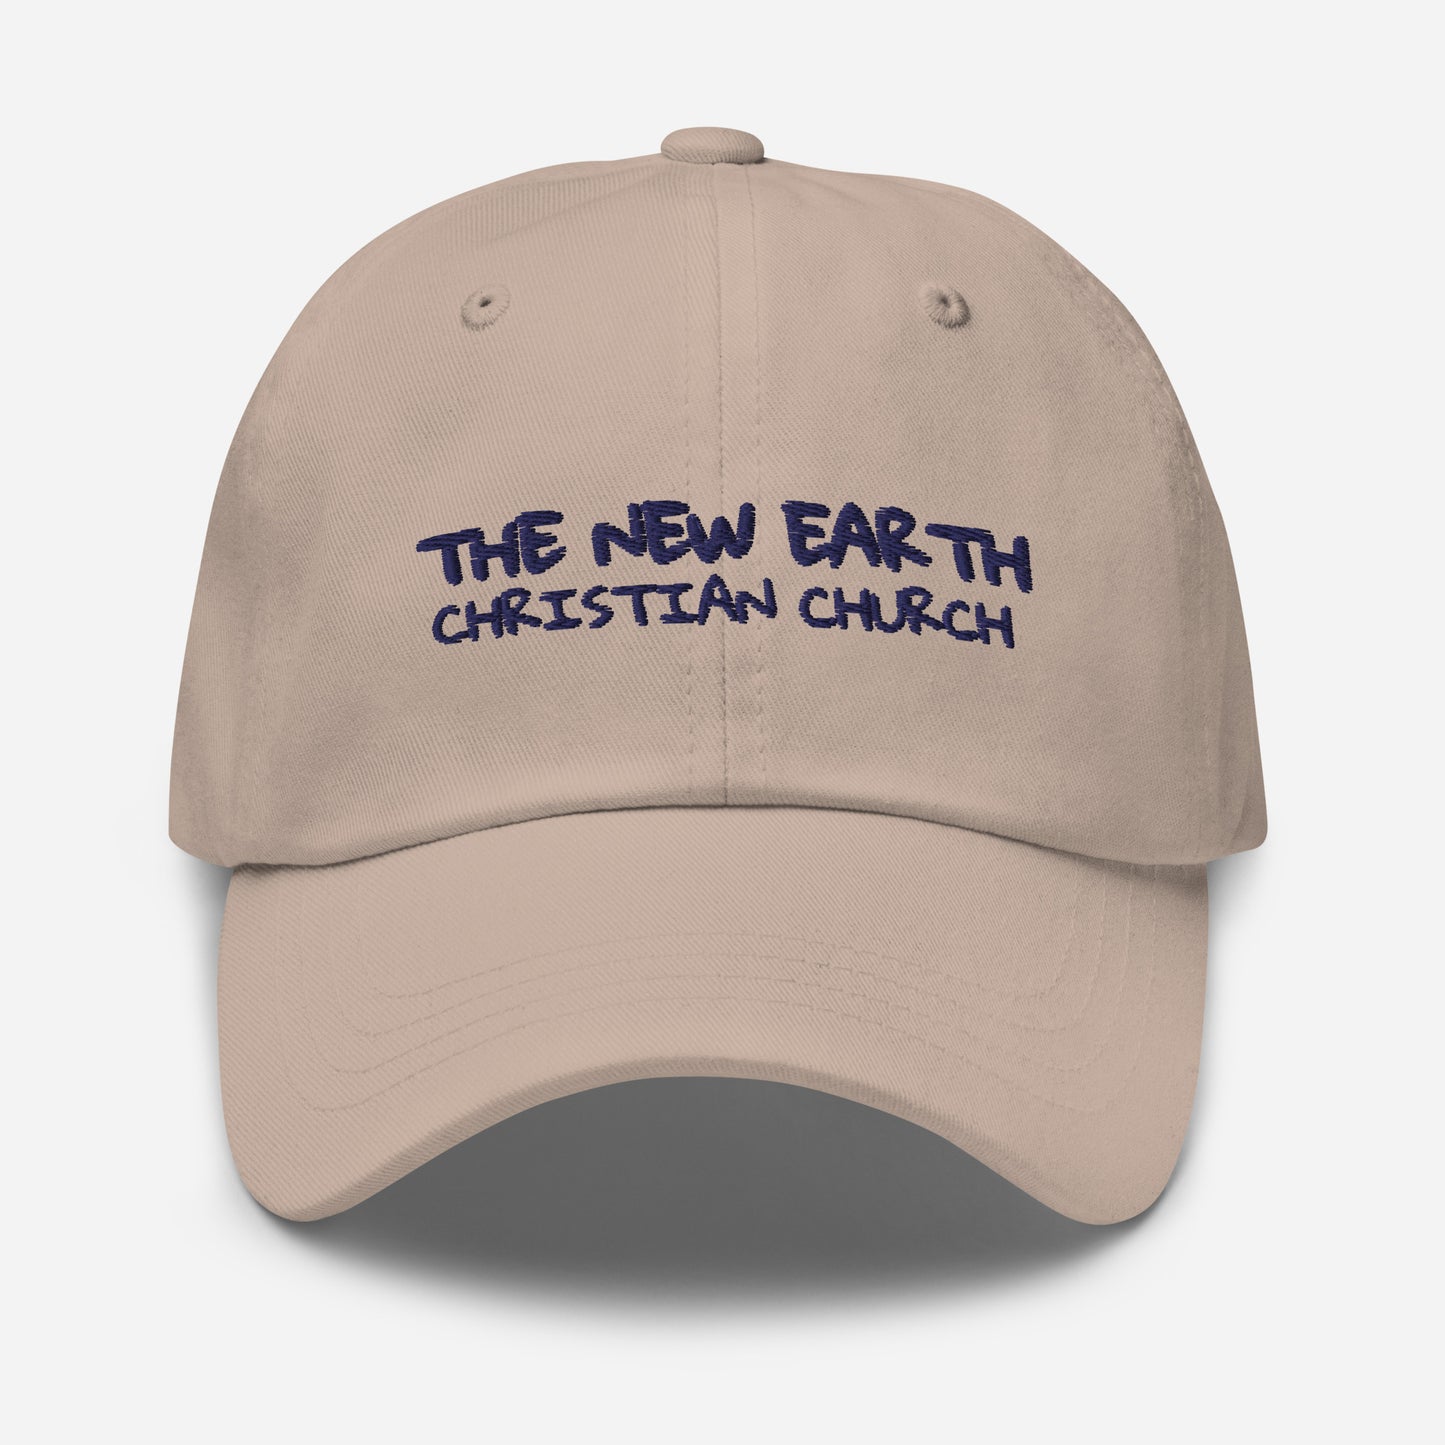 The New Earth Christian Church Cap